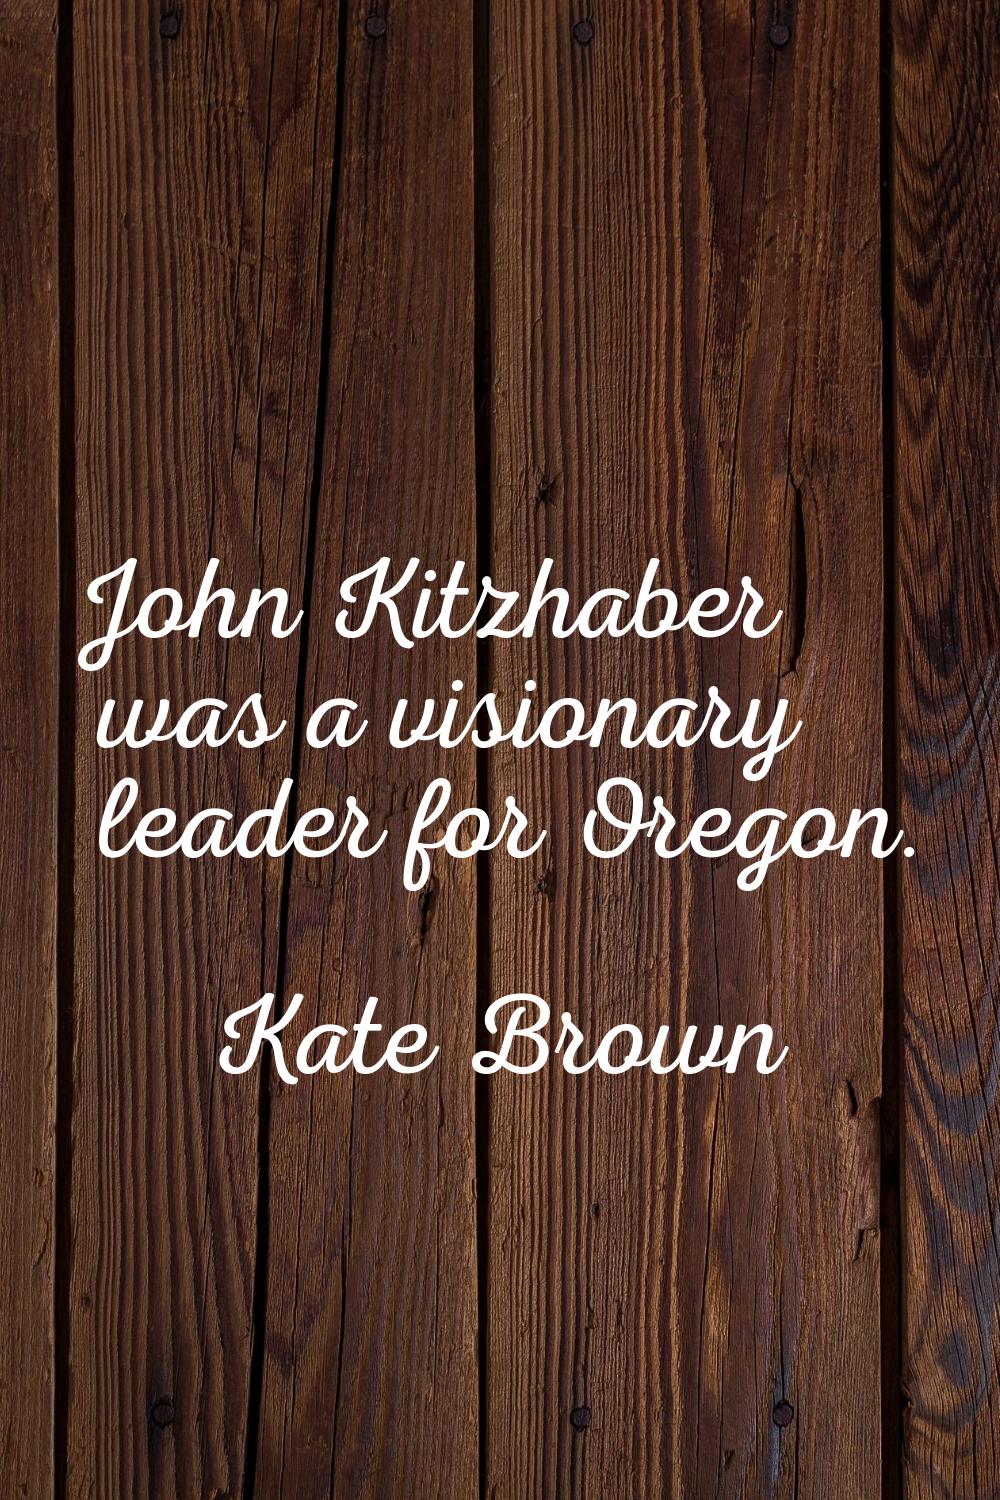 John Kitzhaber was a visionary leader for Oregon.